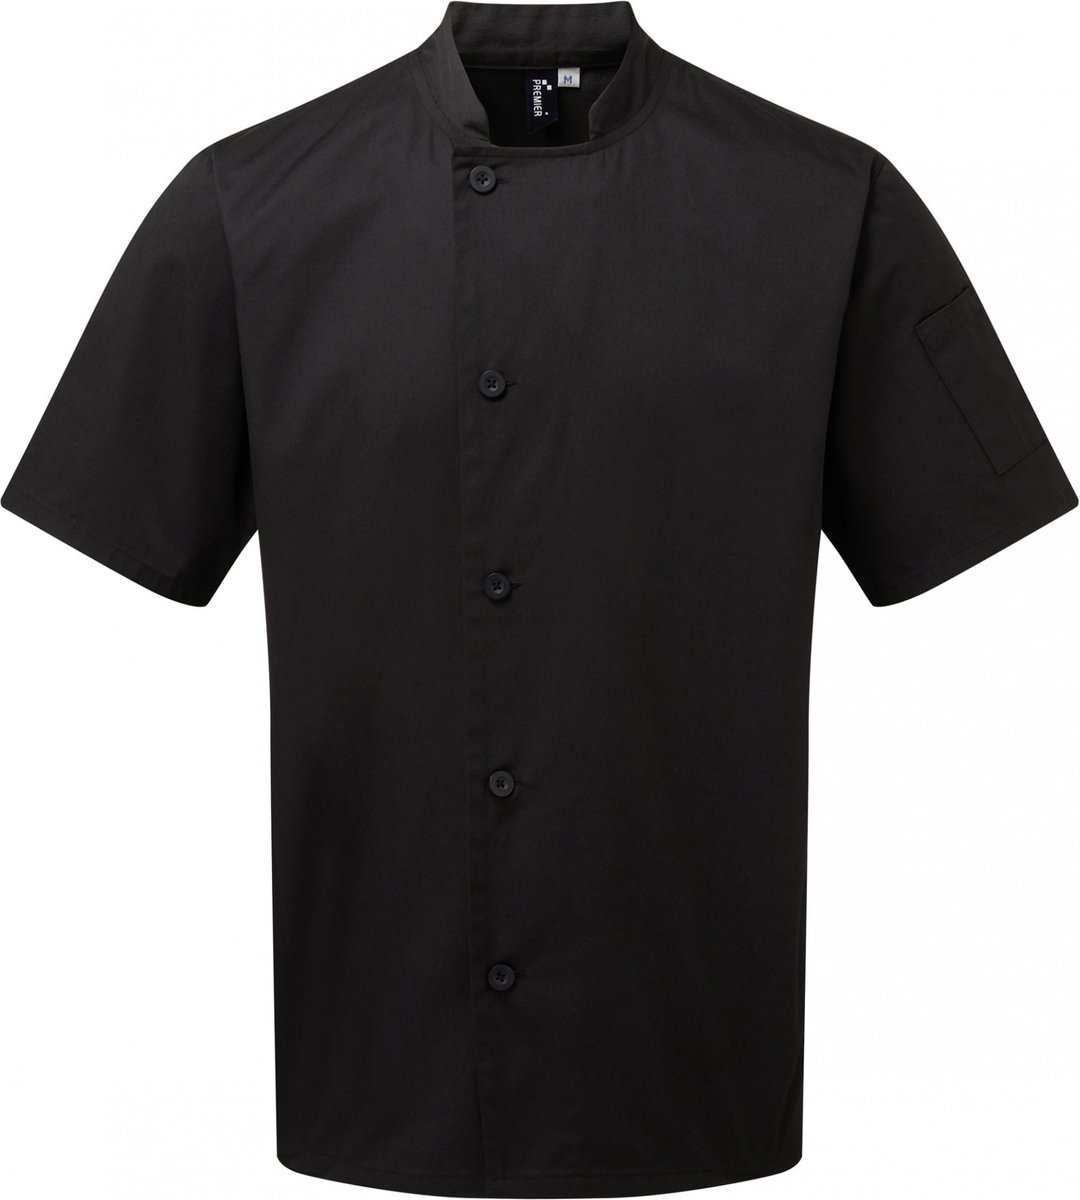 Schort/Tuniek/Werkblouse Unisex 3XL Premier Black 65% Polyester, 35% Katoen